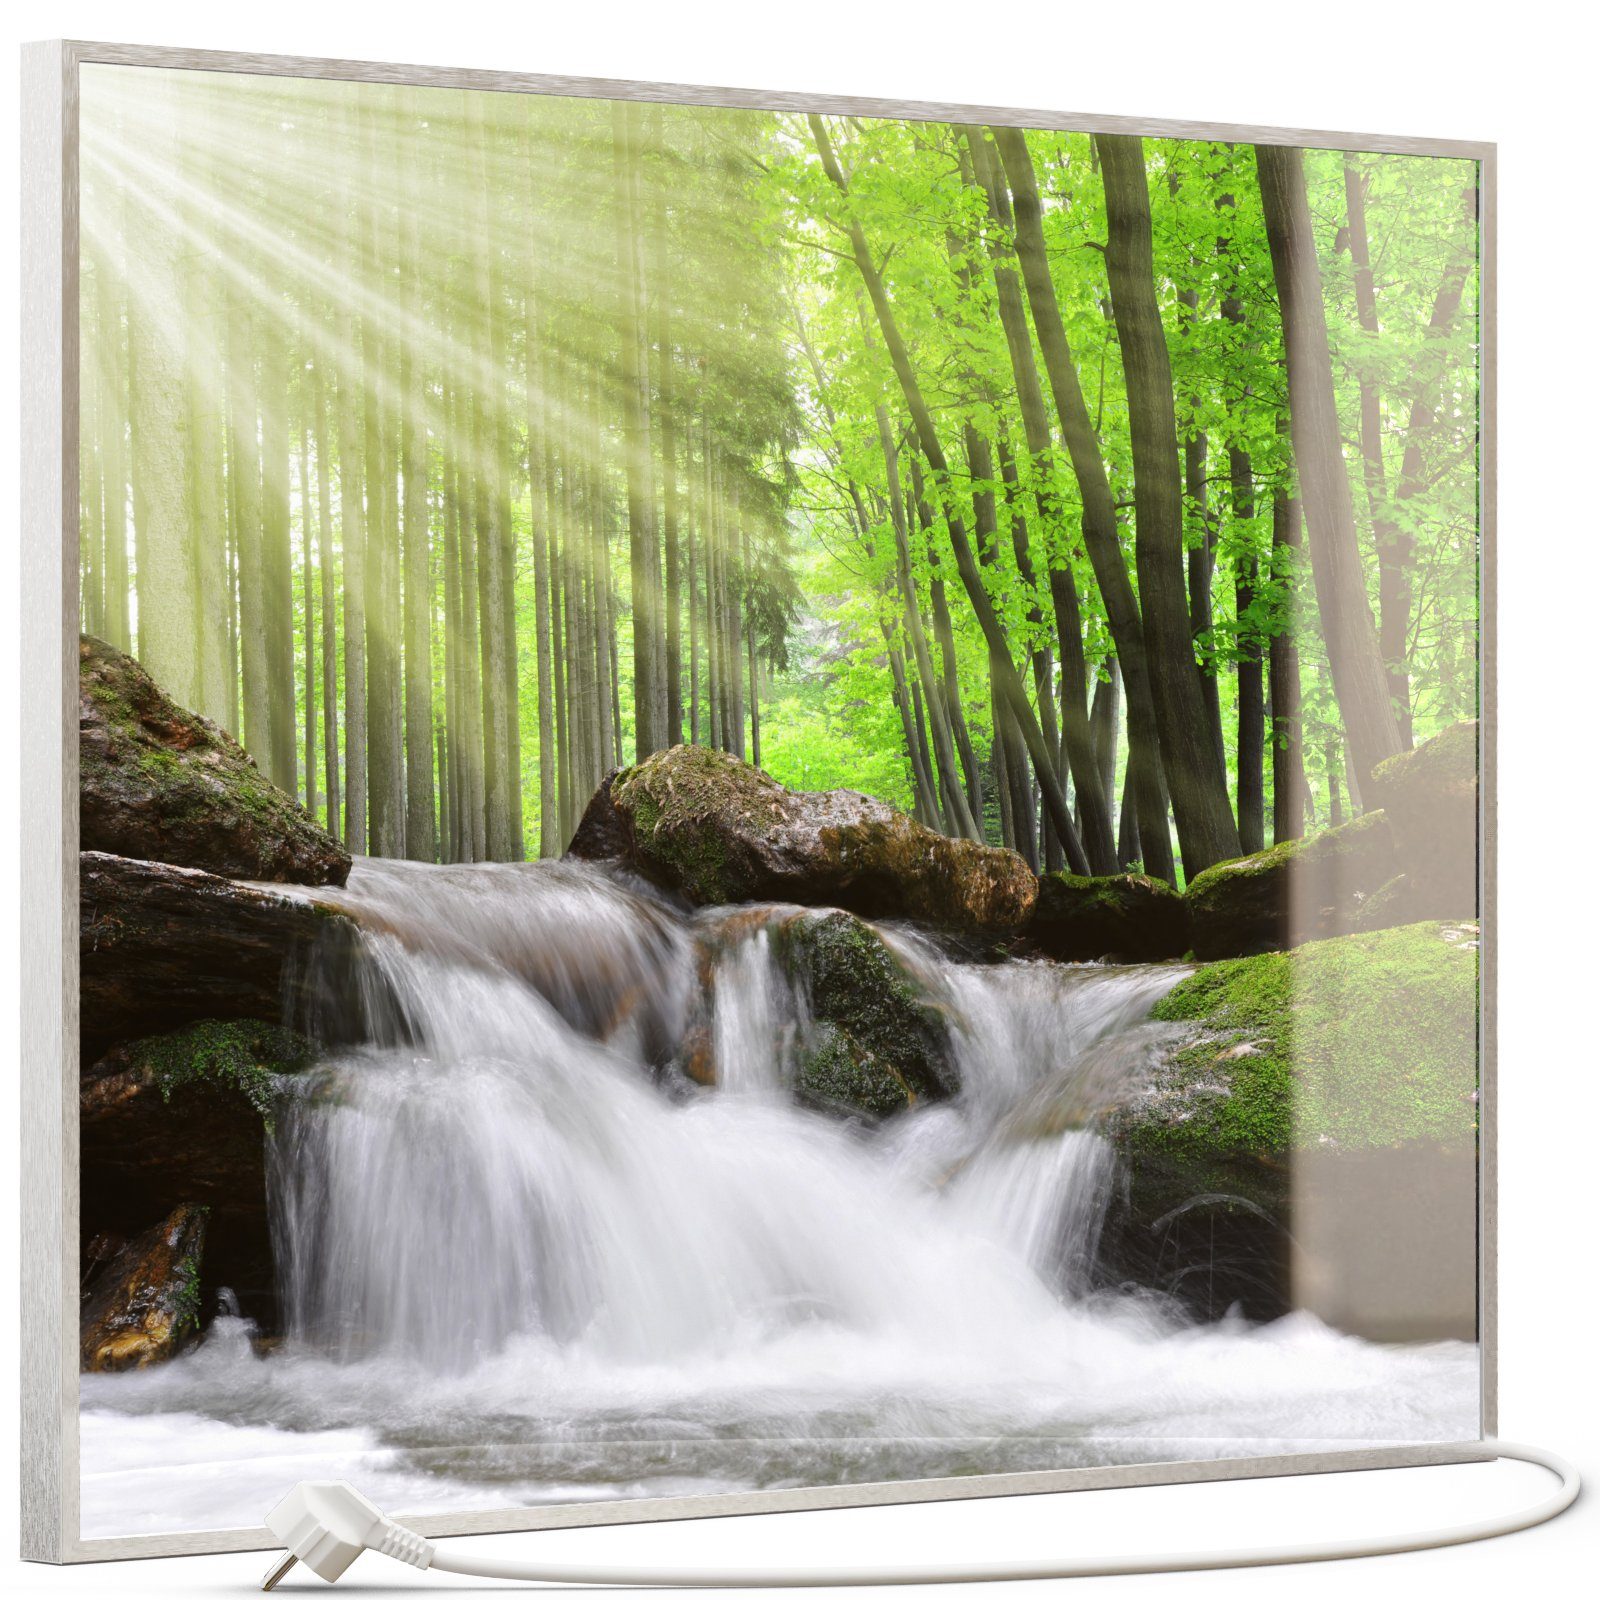 STEINFELD Heizsysteme Infrarotheizung, Glas Bild 350W-1200W, Inklusive Thermostat, 065 Wasserfall Wald Silber